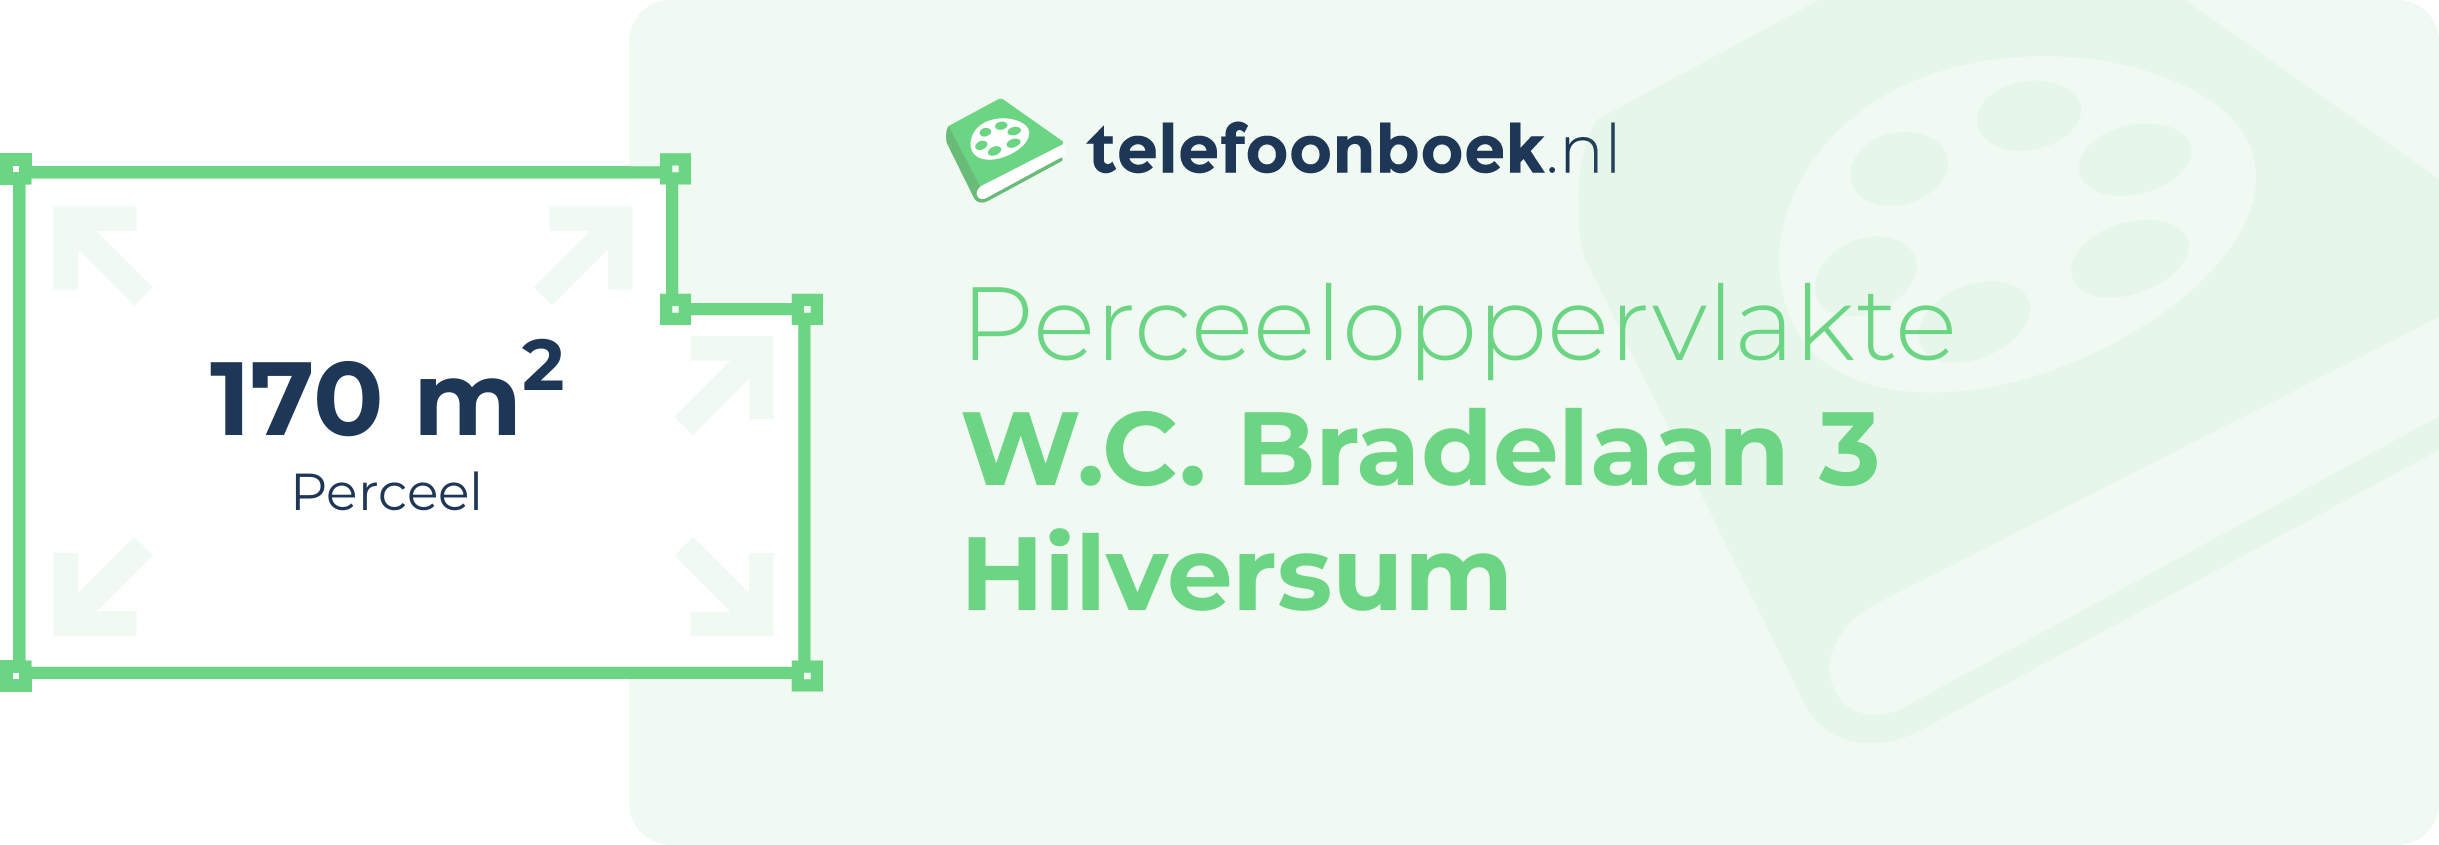 Perceeloppervlakte W.C. Bradelaan 3 Hilversum